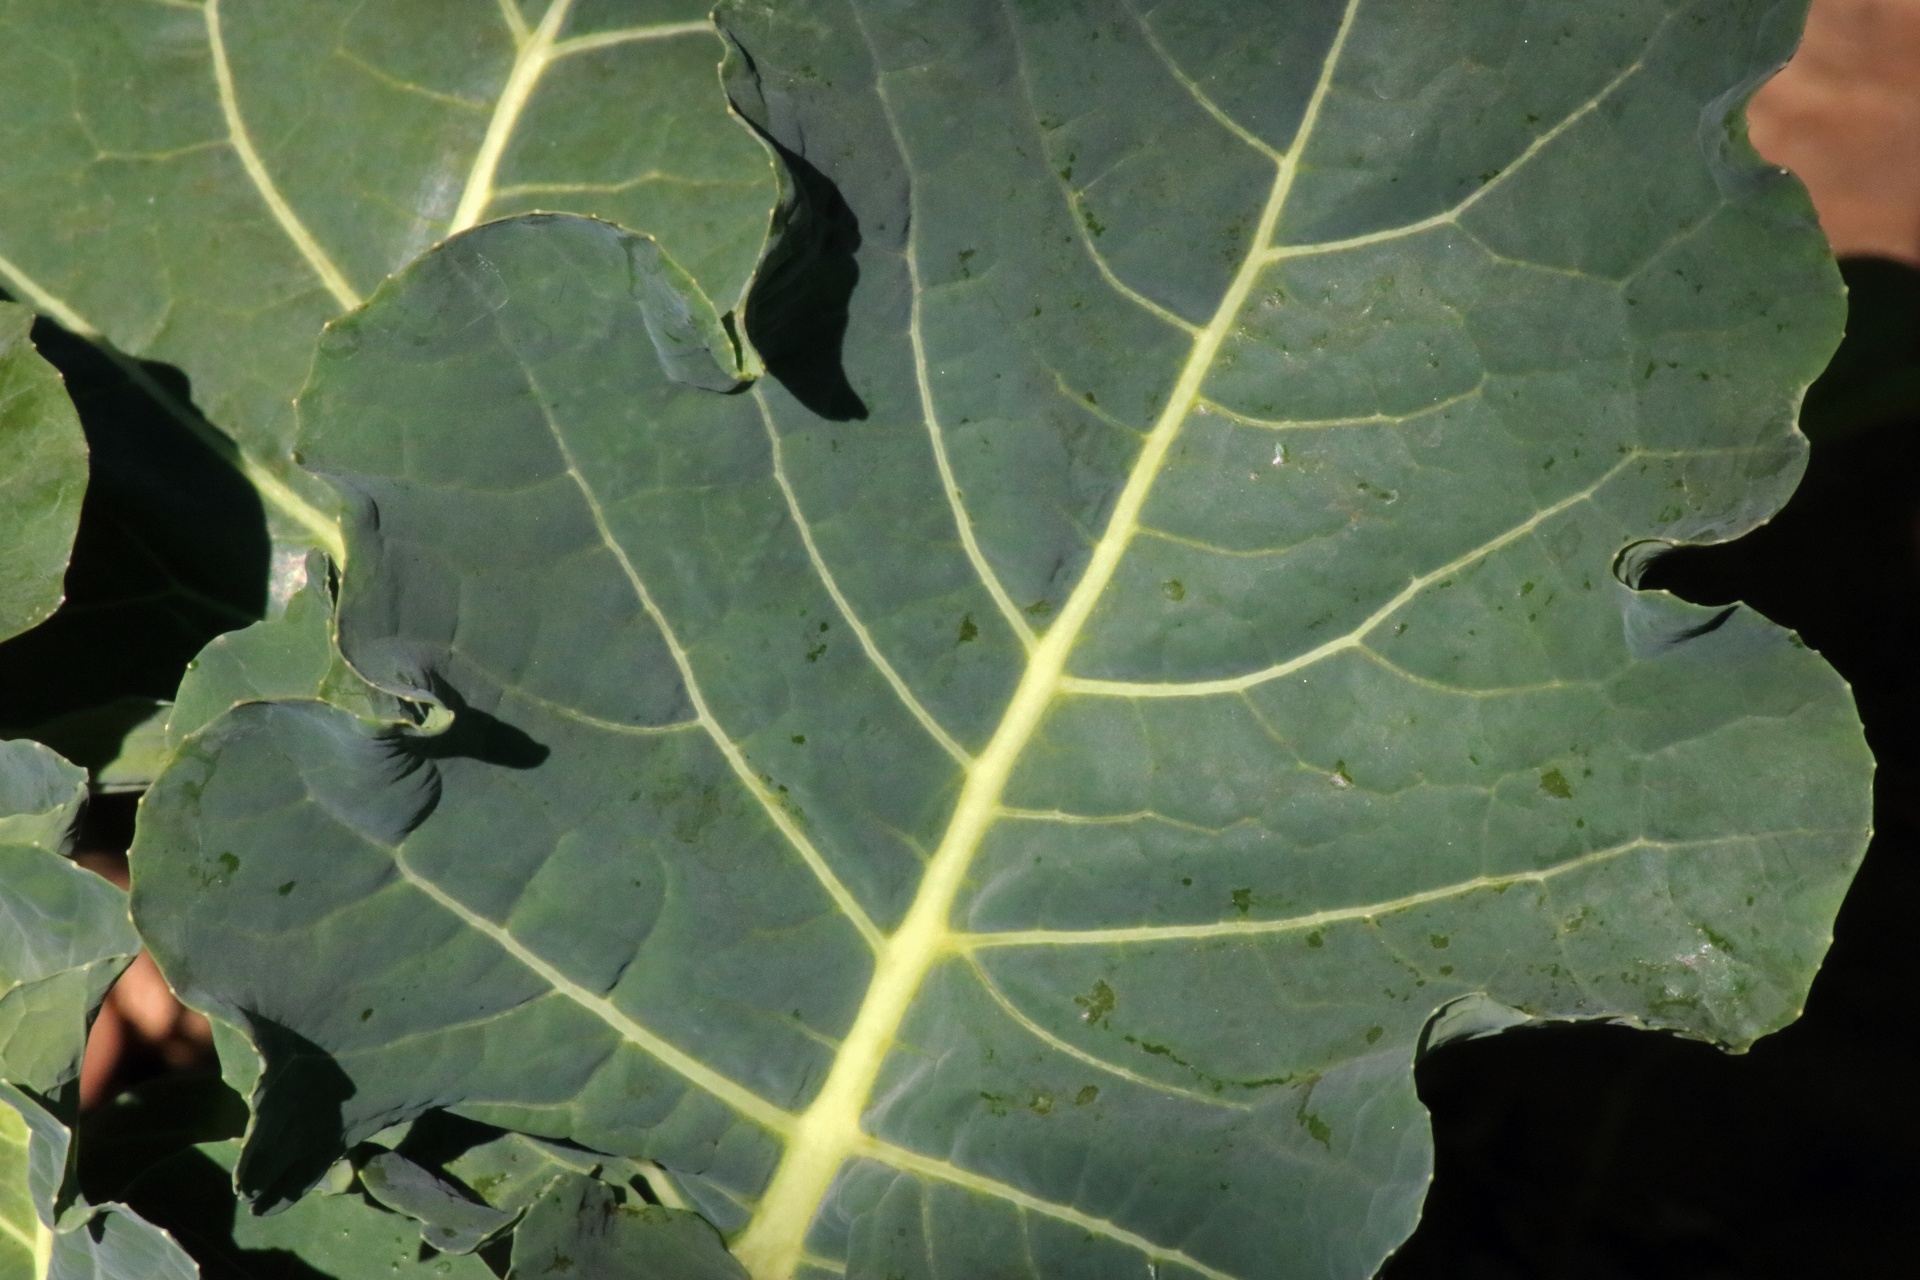 Veined Broccoli Leaf Plant